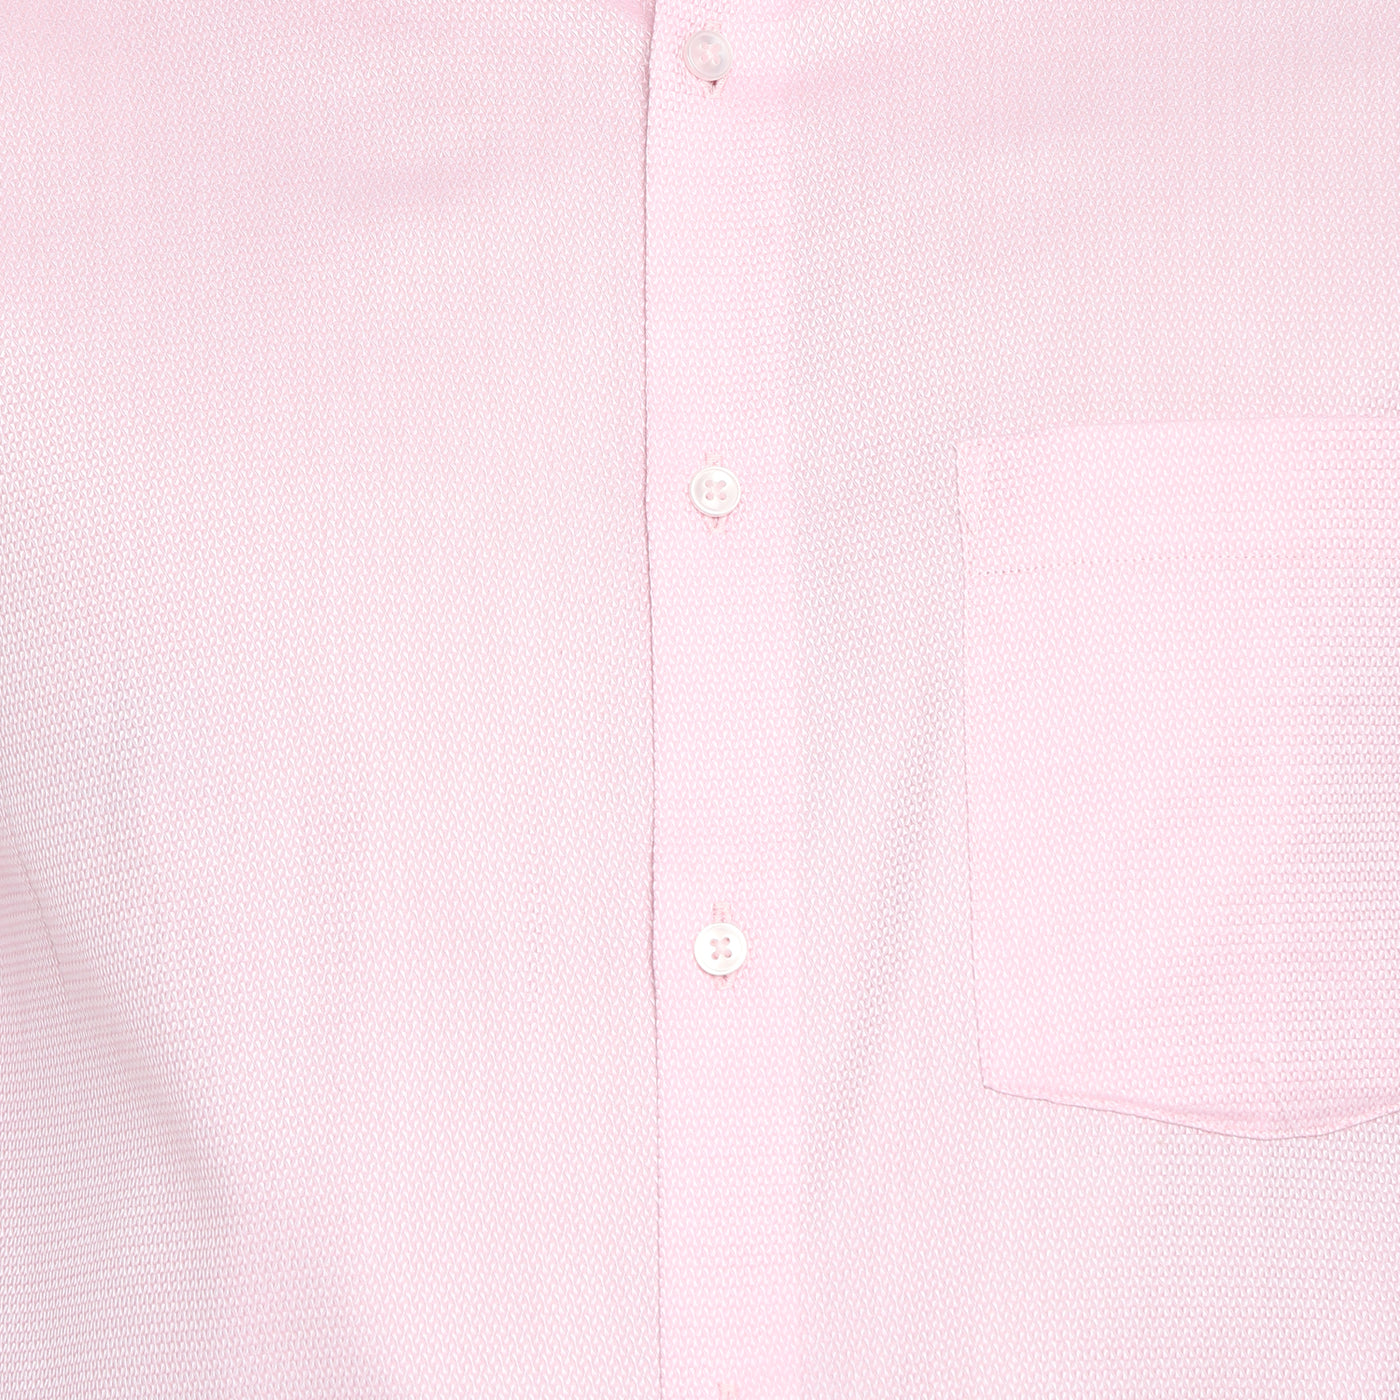 Cotton Pink Slim Fit Self Design Formal Shirt